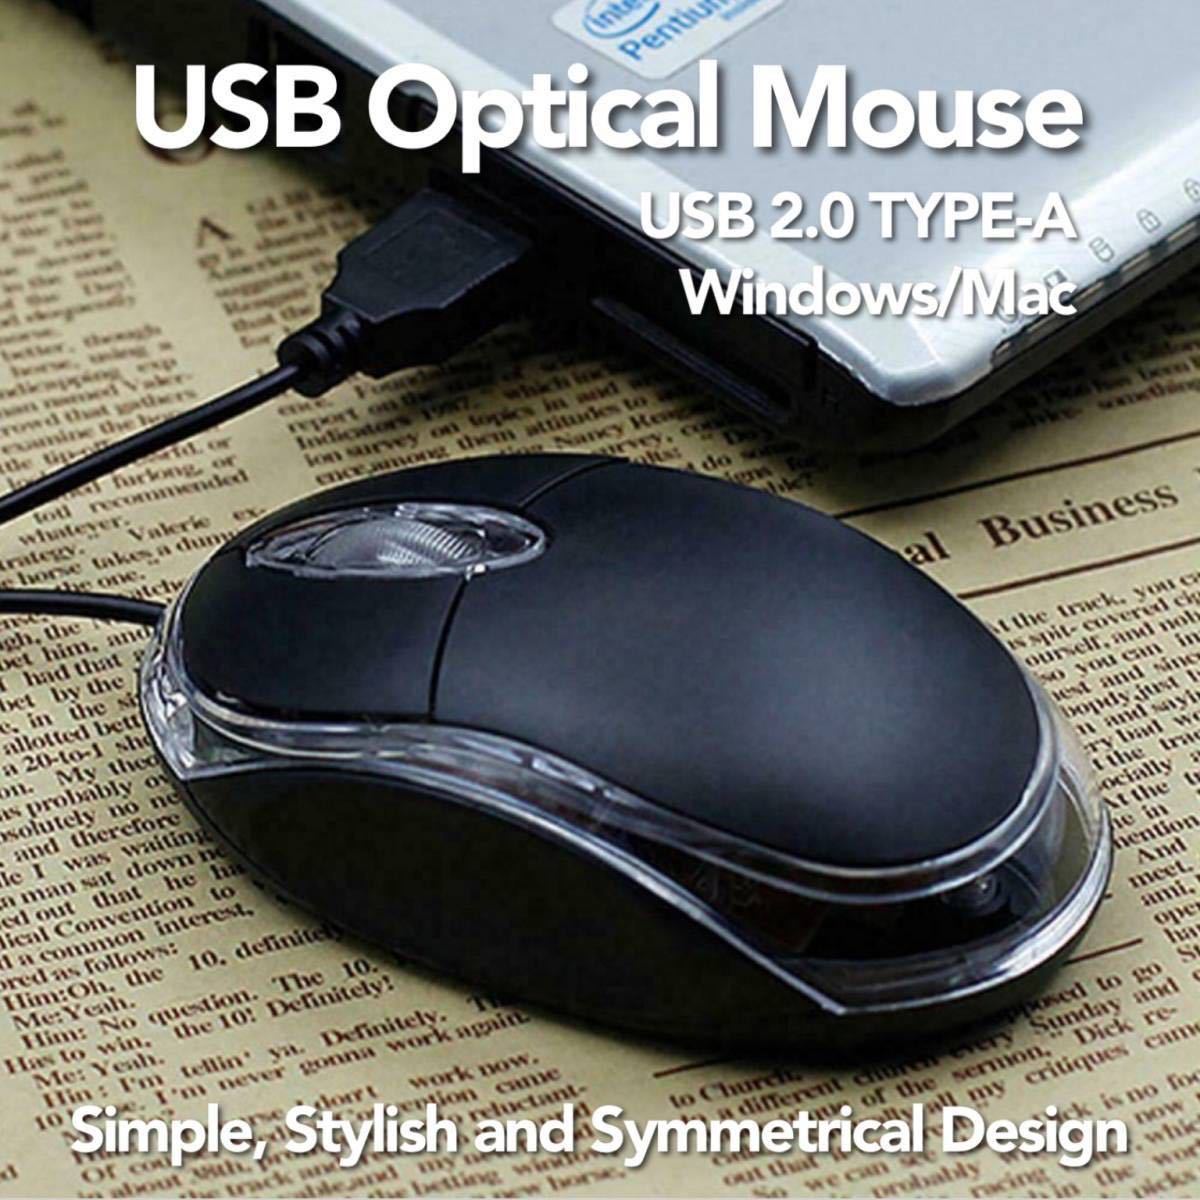 USBマウス 有線 光学式 USB Wired Optical Mouse #3 在宅勤務 テレワーク リモートワーク 遠隔授業 リモート授業_画像1